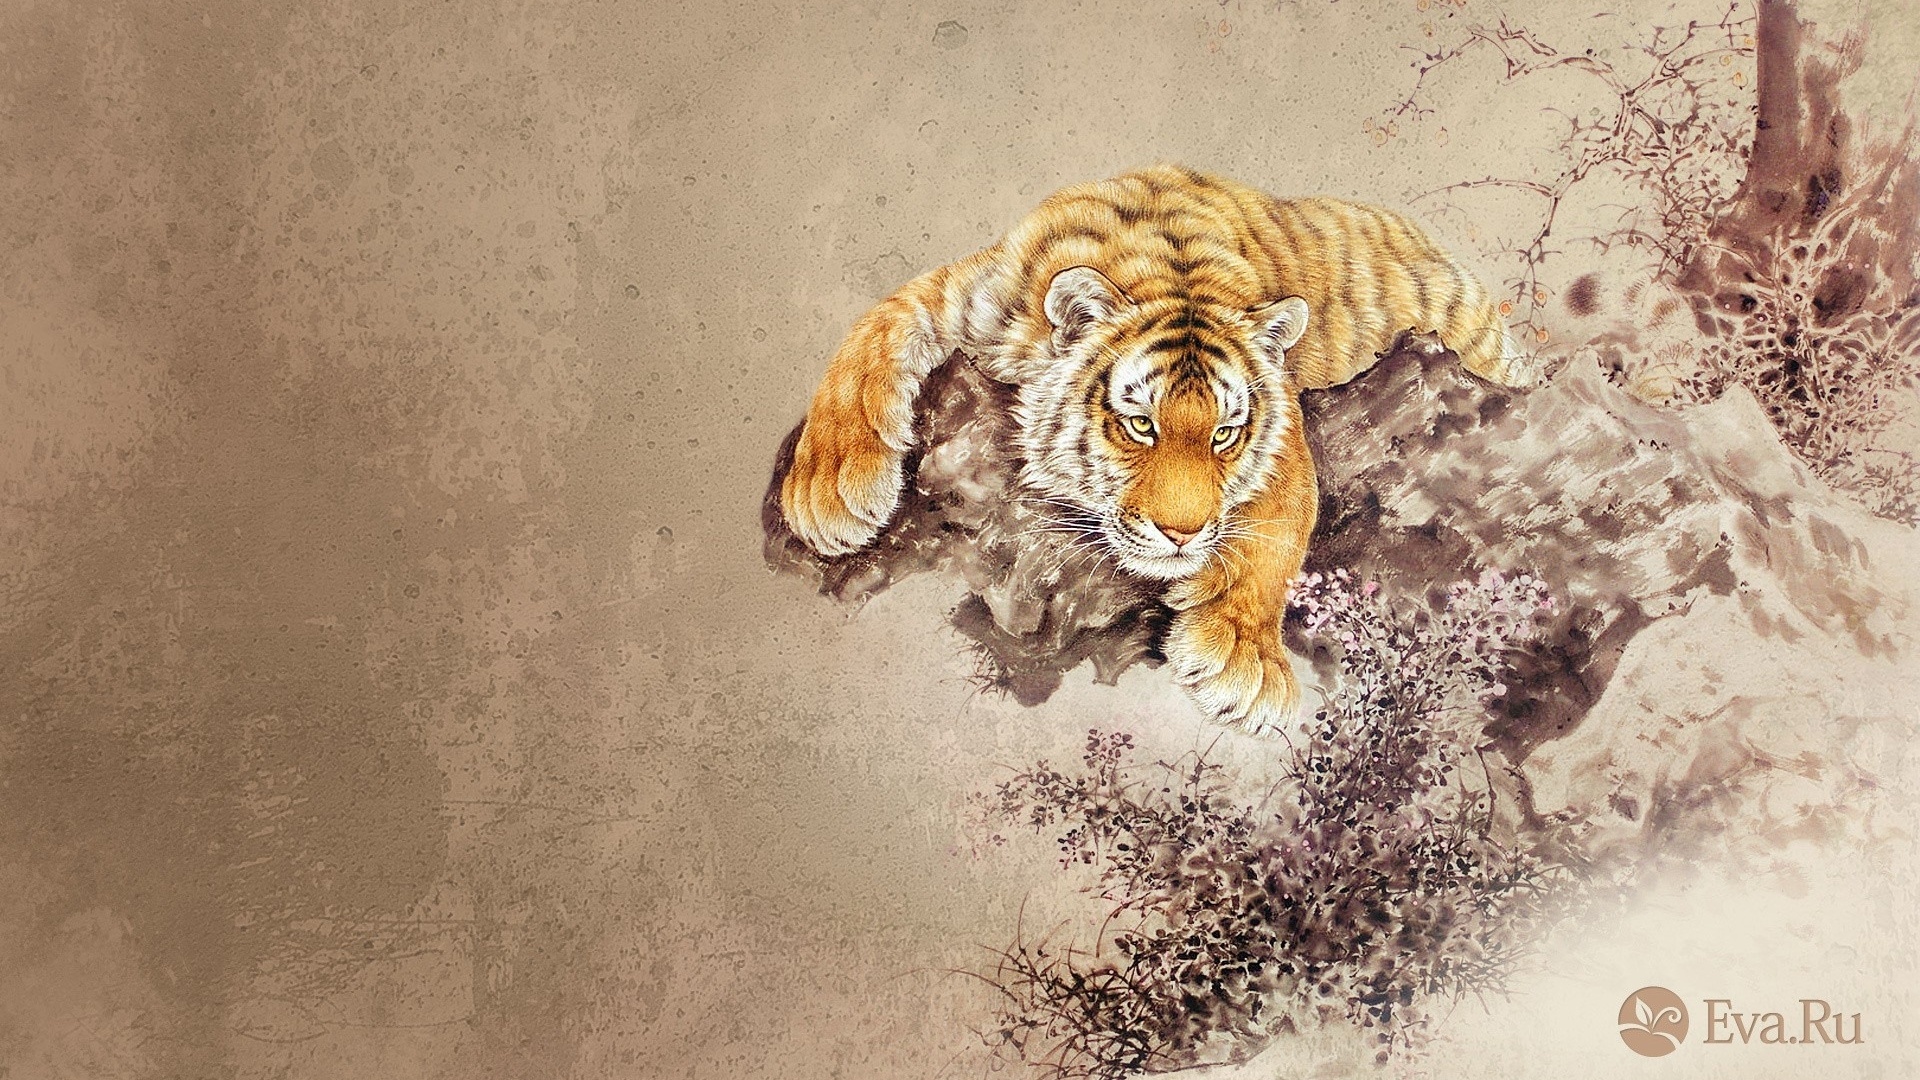 Tiger Abstract Desktop Pc And Mac Wallpaper